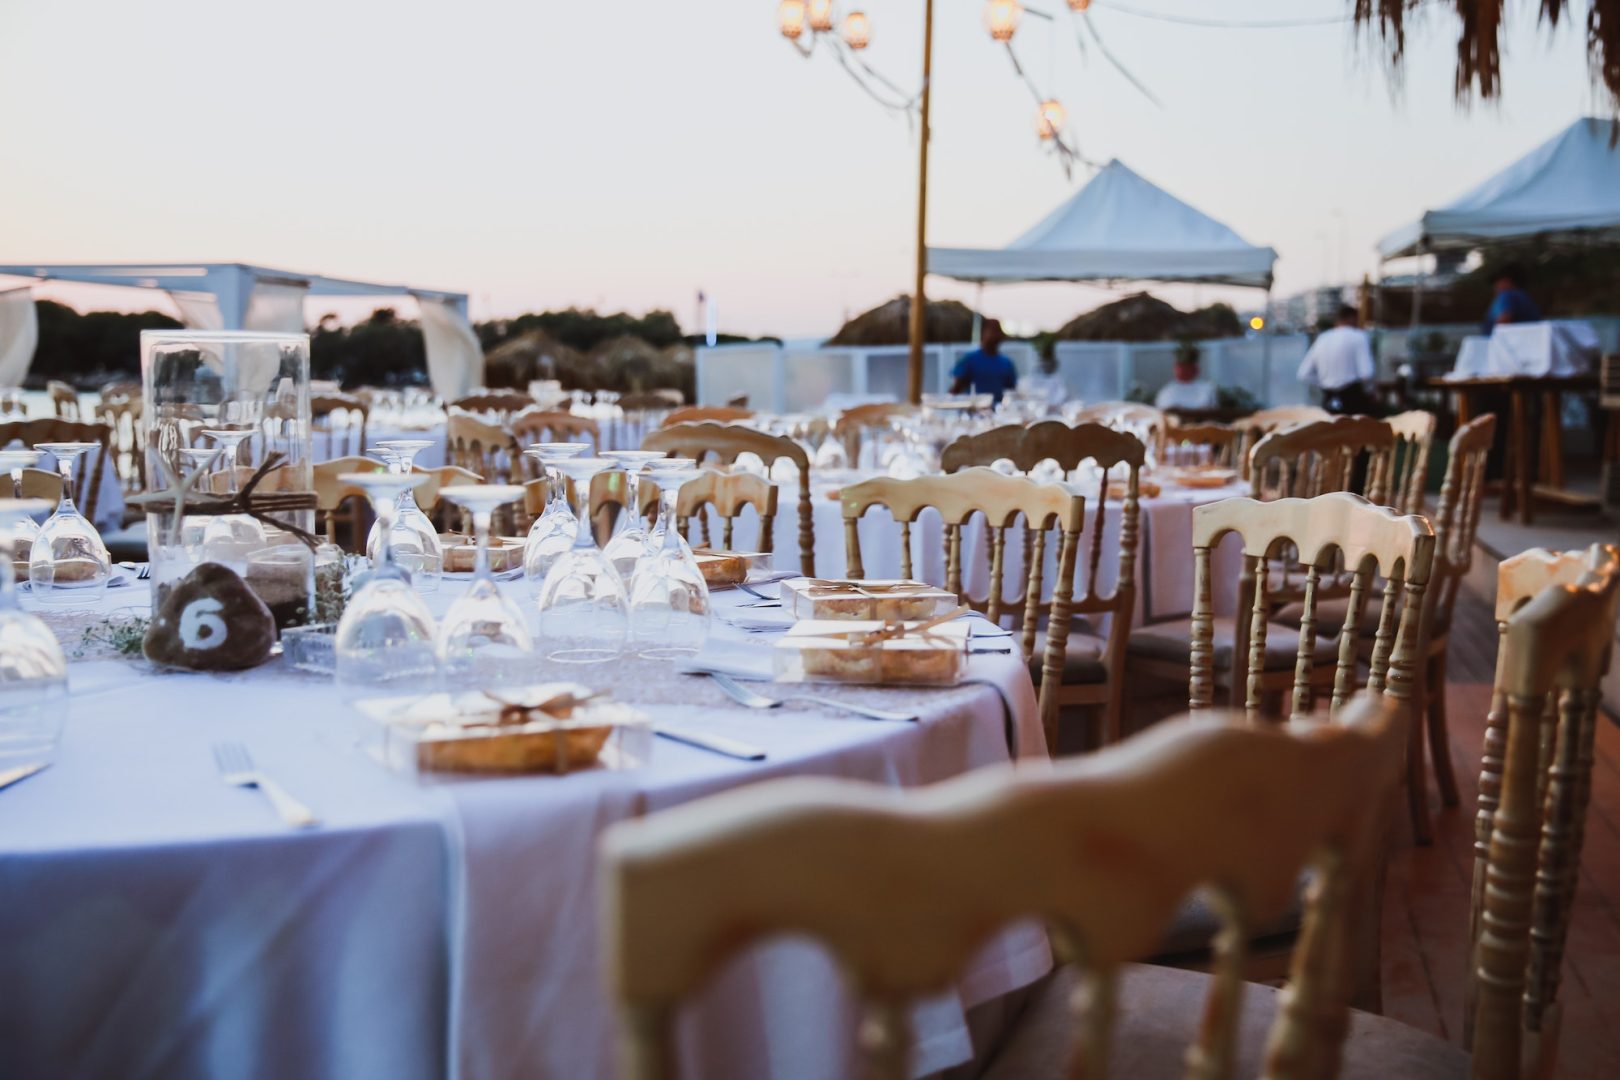 Elegance table set up for wedding in beige. Wedding dinner set up near the sea